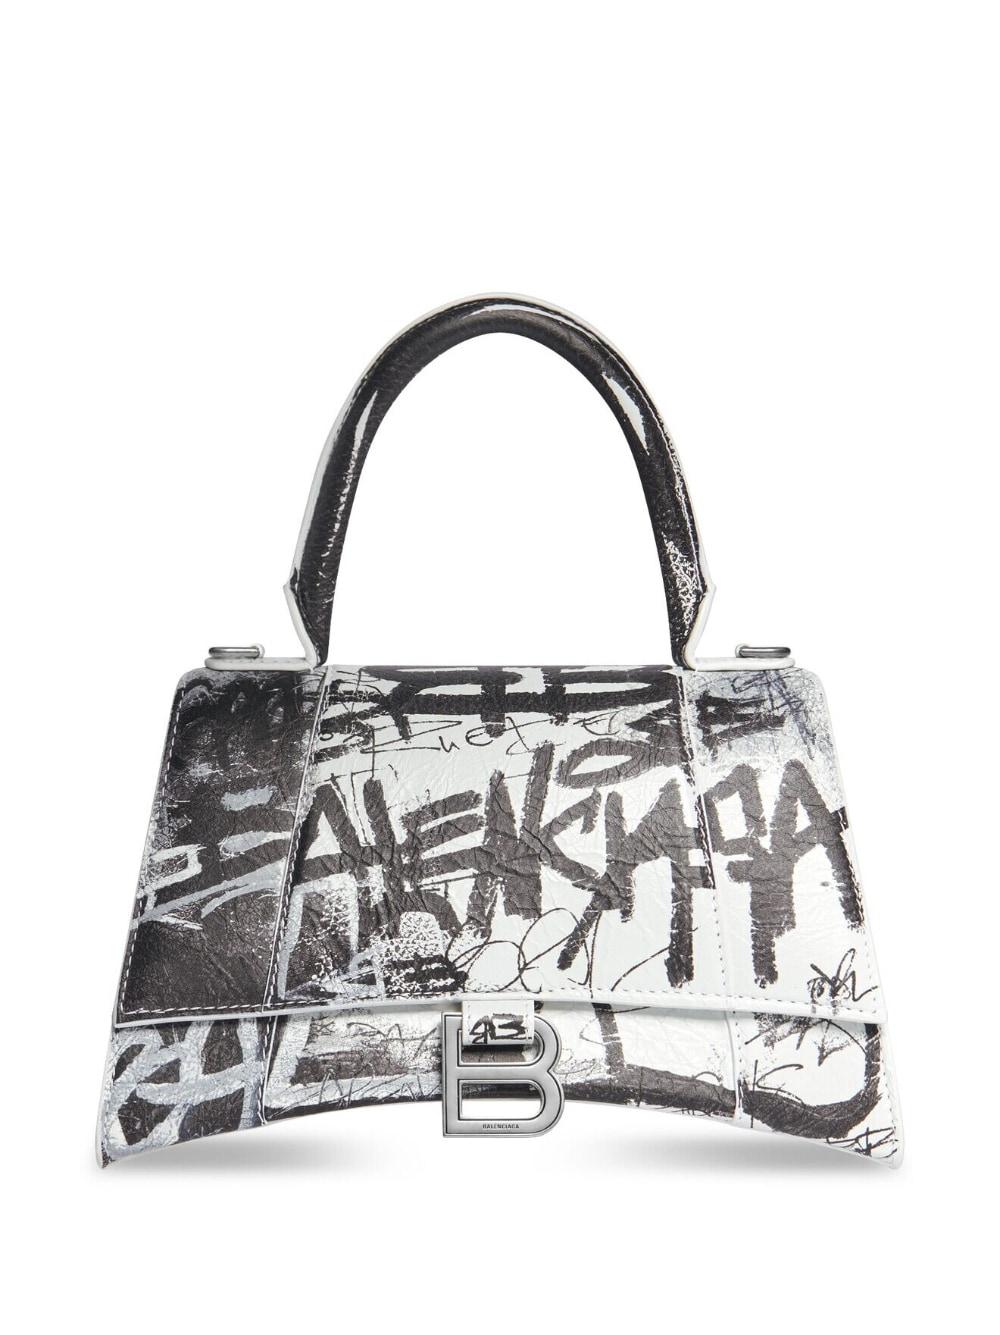 Balenciaga Graffiti-print Leather Shoulder Bag in White | Lyst